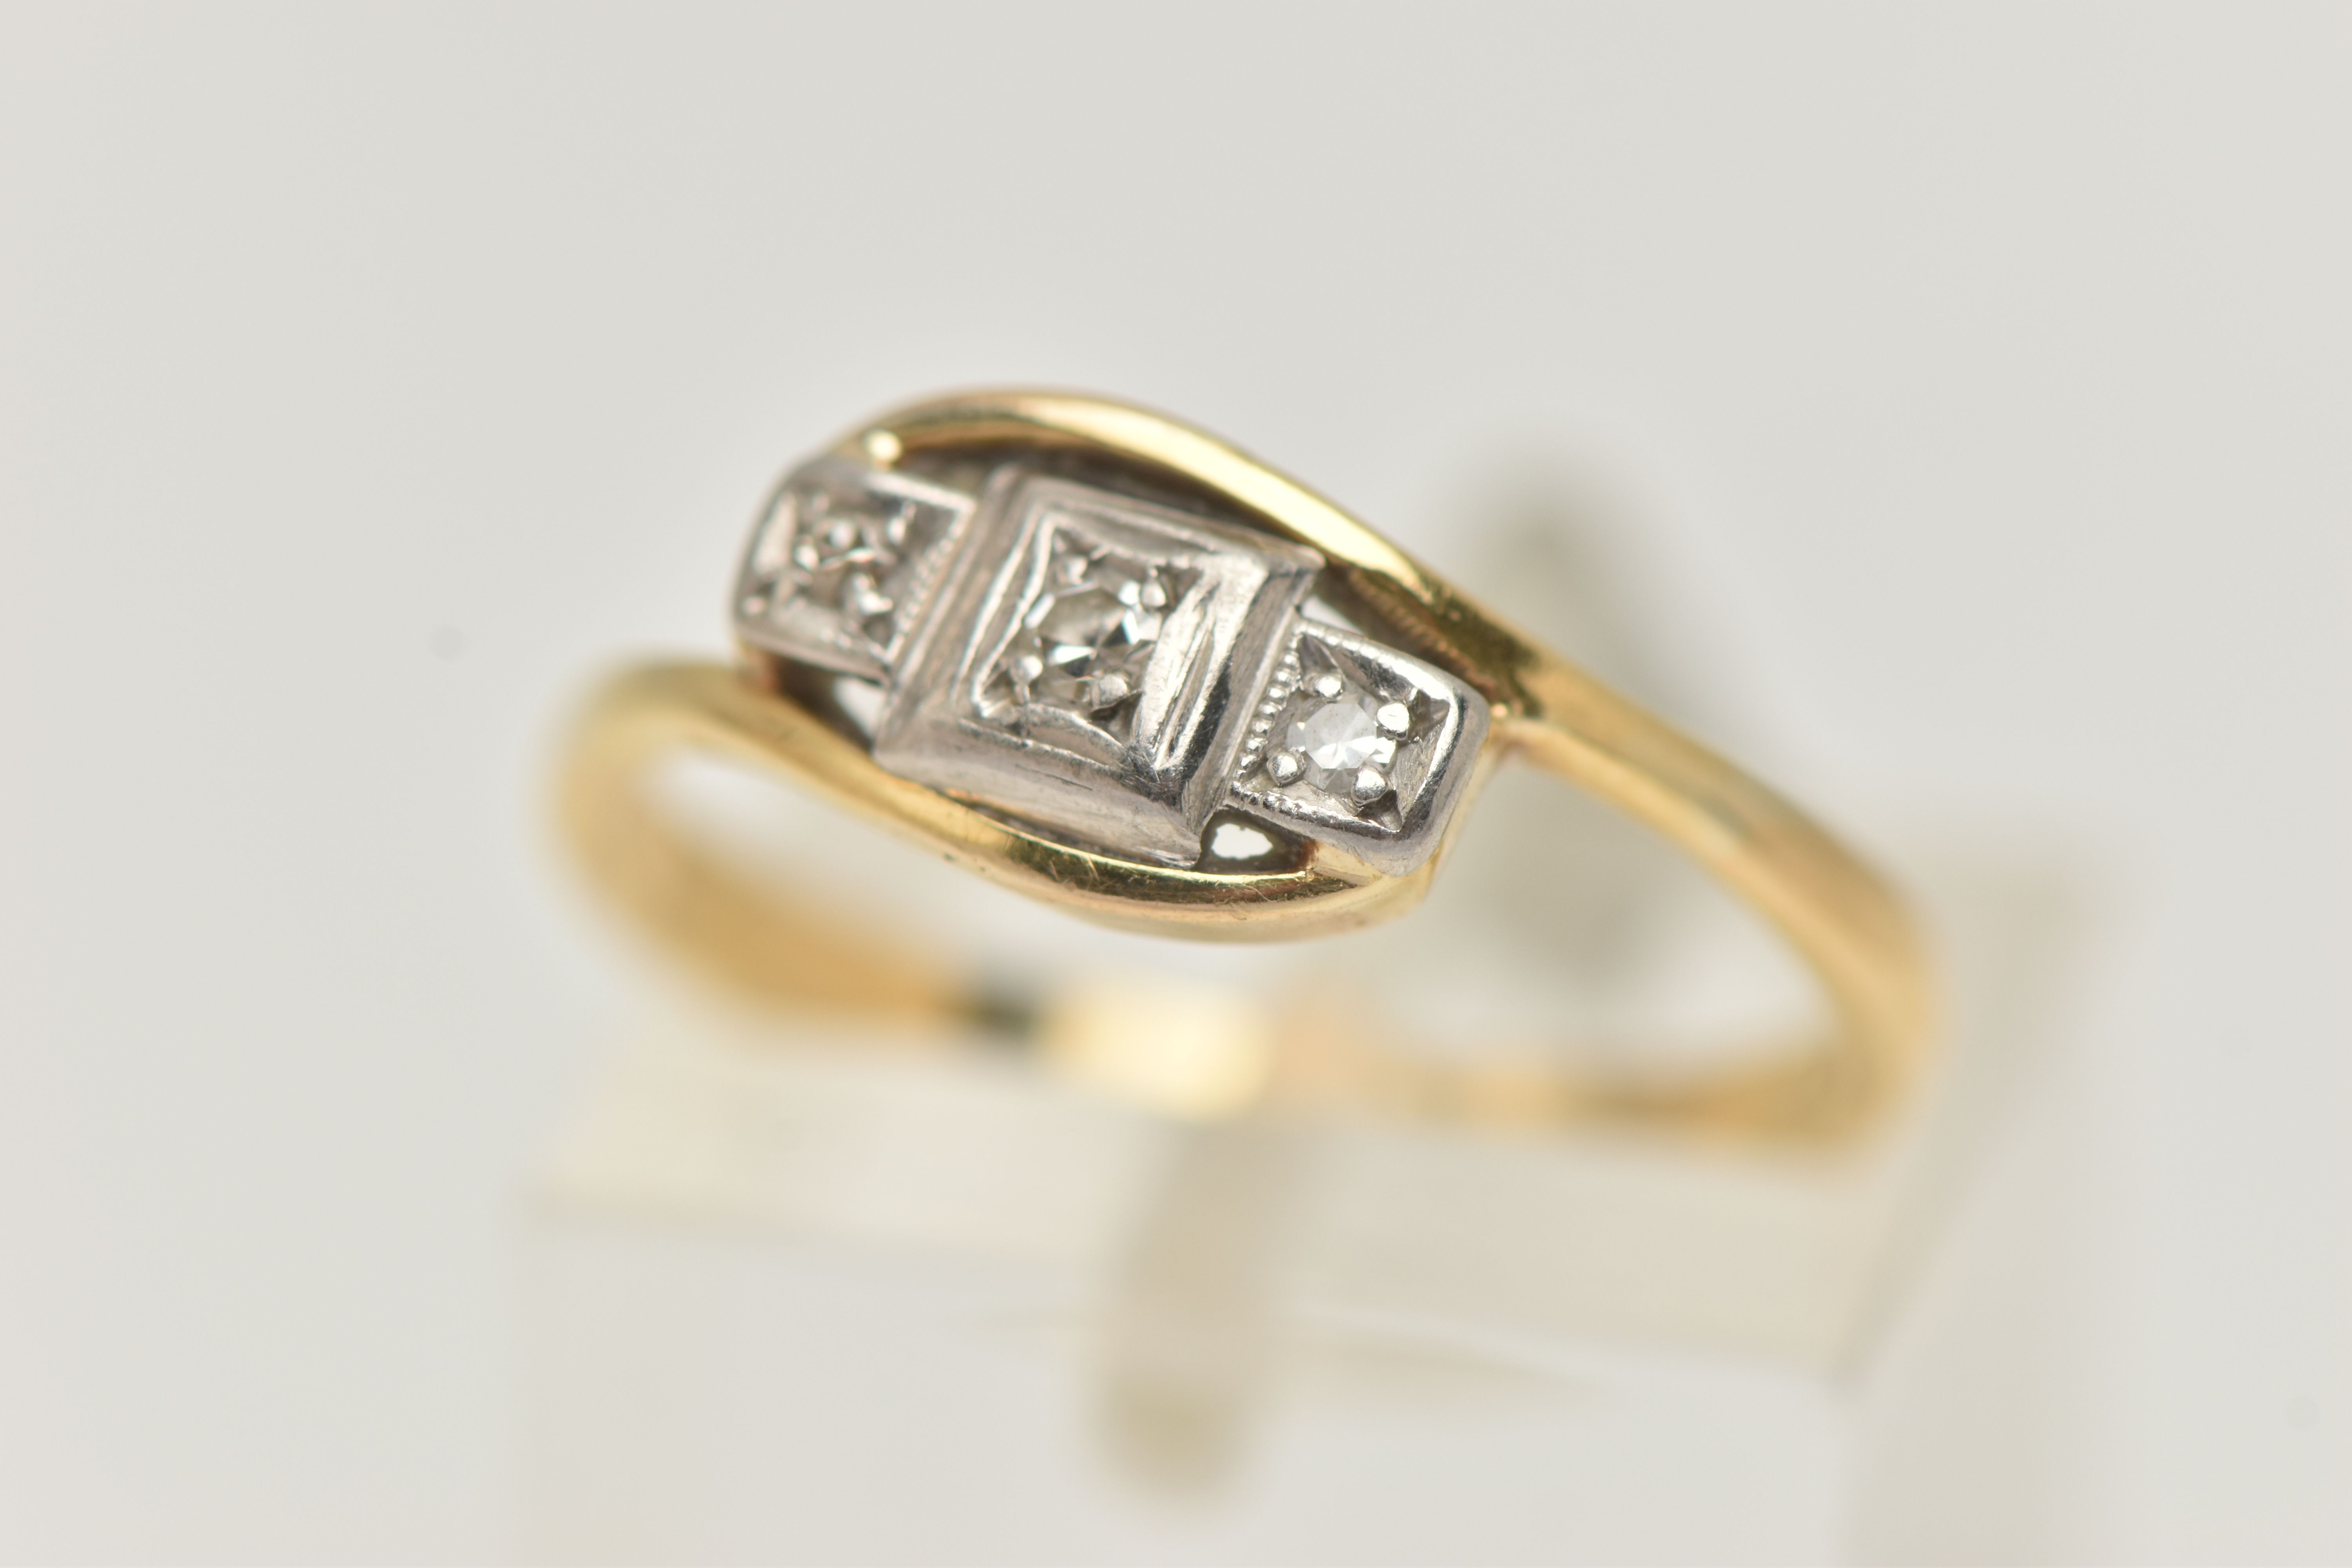 A THREE STONE DIAMOND RING, three single cut diamonds, prong set in white metal, leading on to a